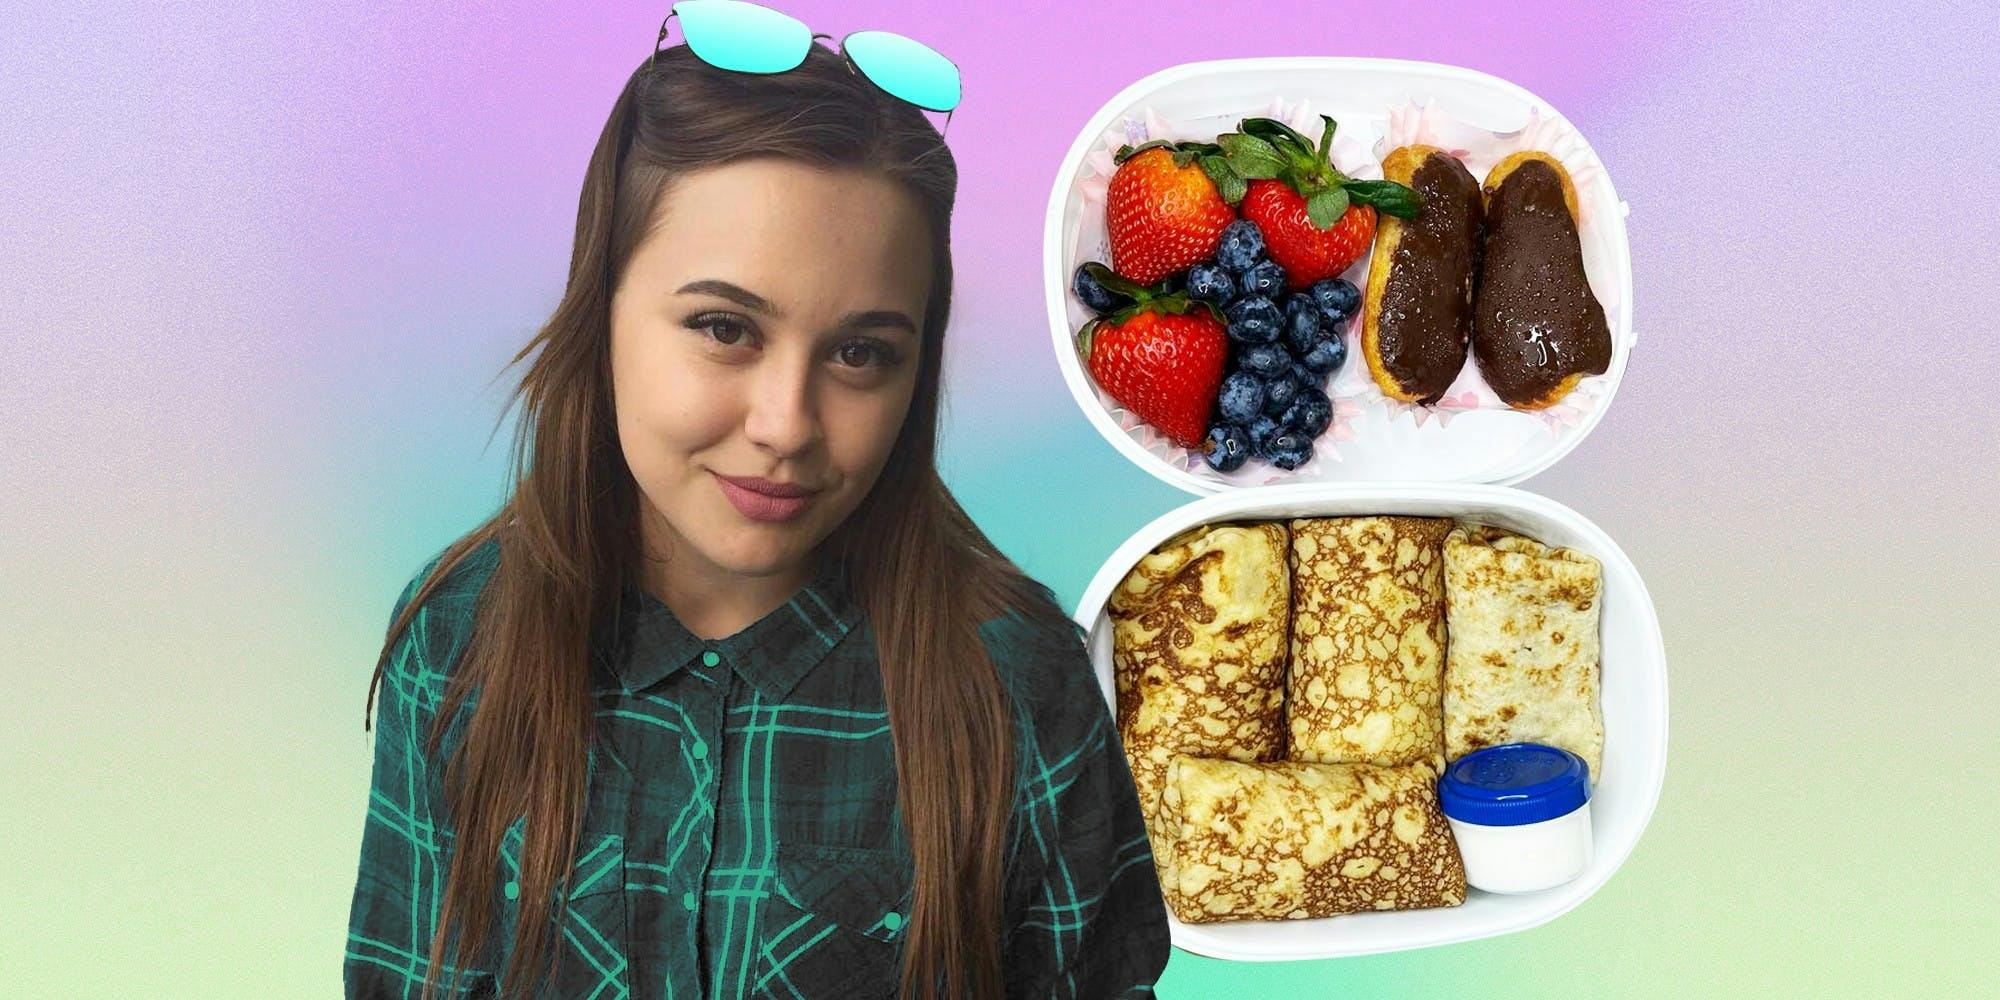 Lizastian shares the recipe behind her viral lunch box-packing TikToks